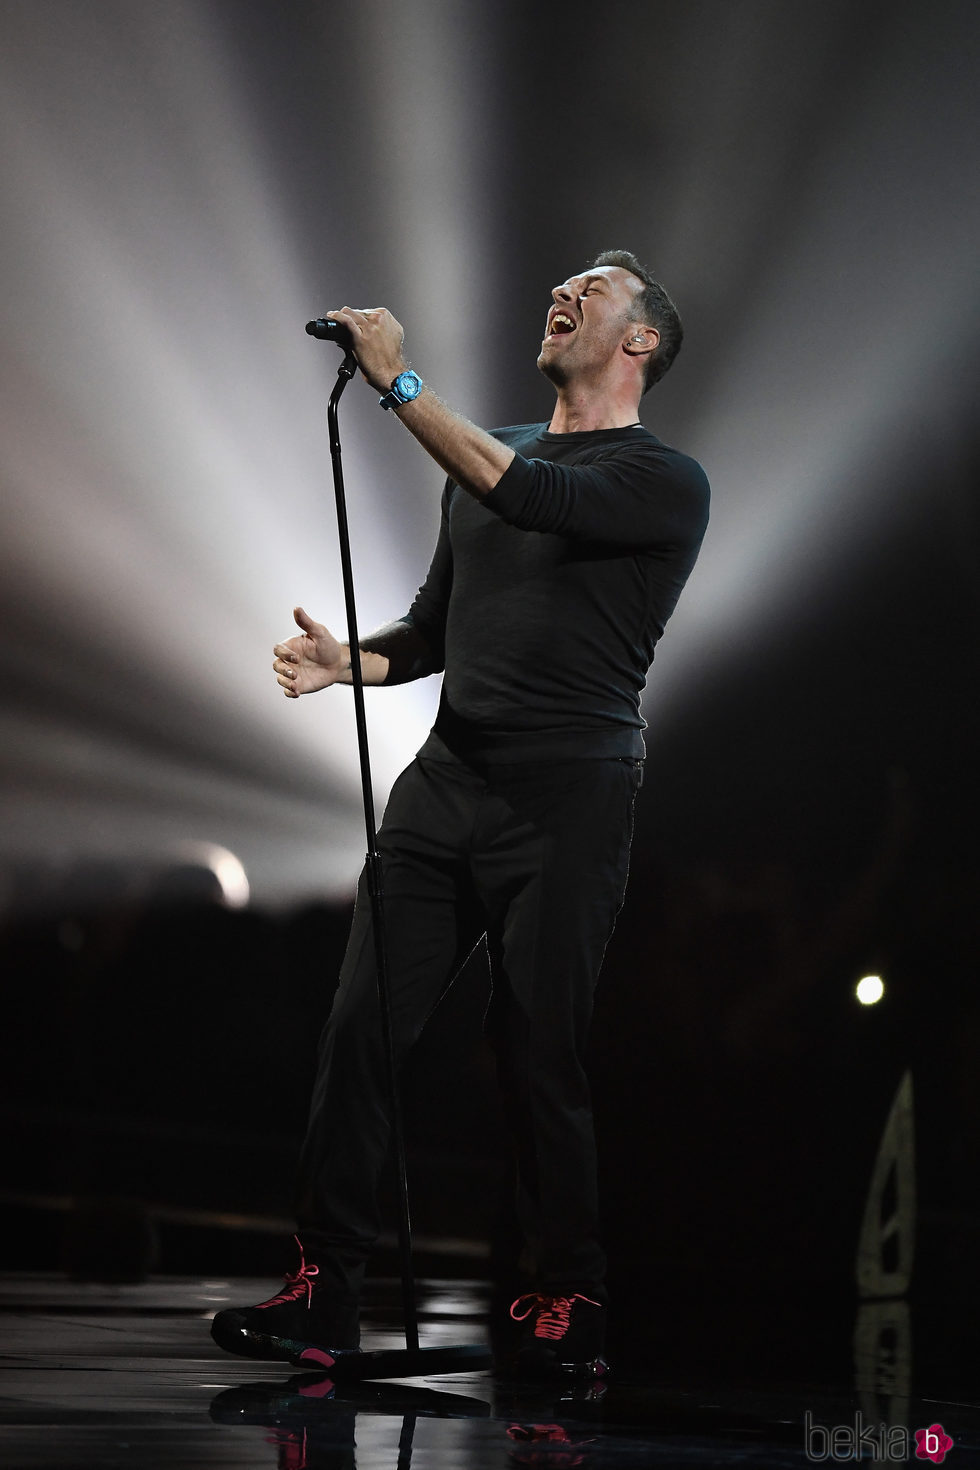 Chris Martin rinde tributo a George Michael en los Brit Awards 2017